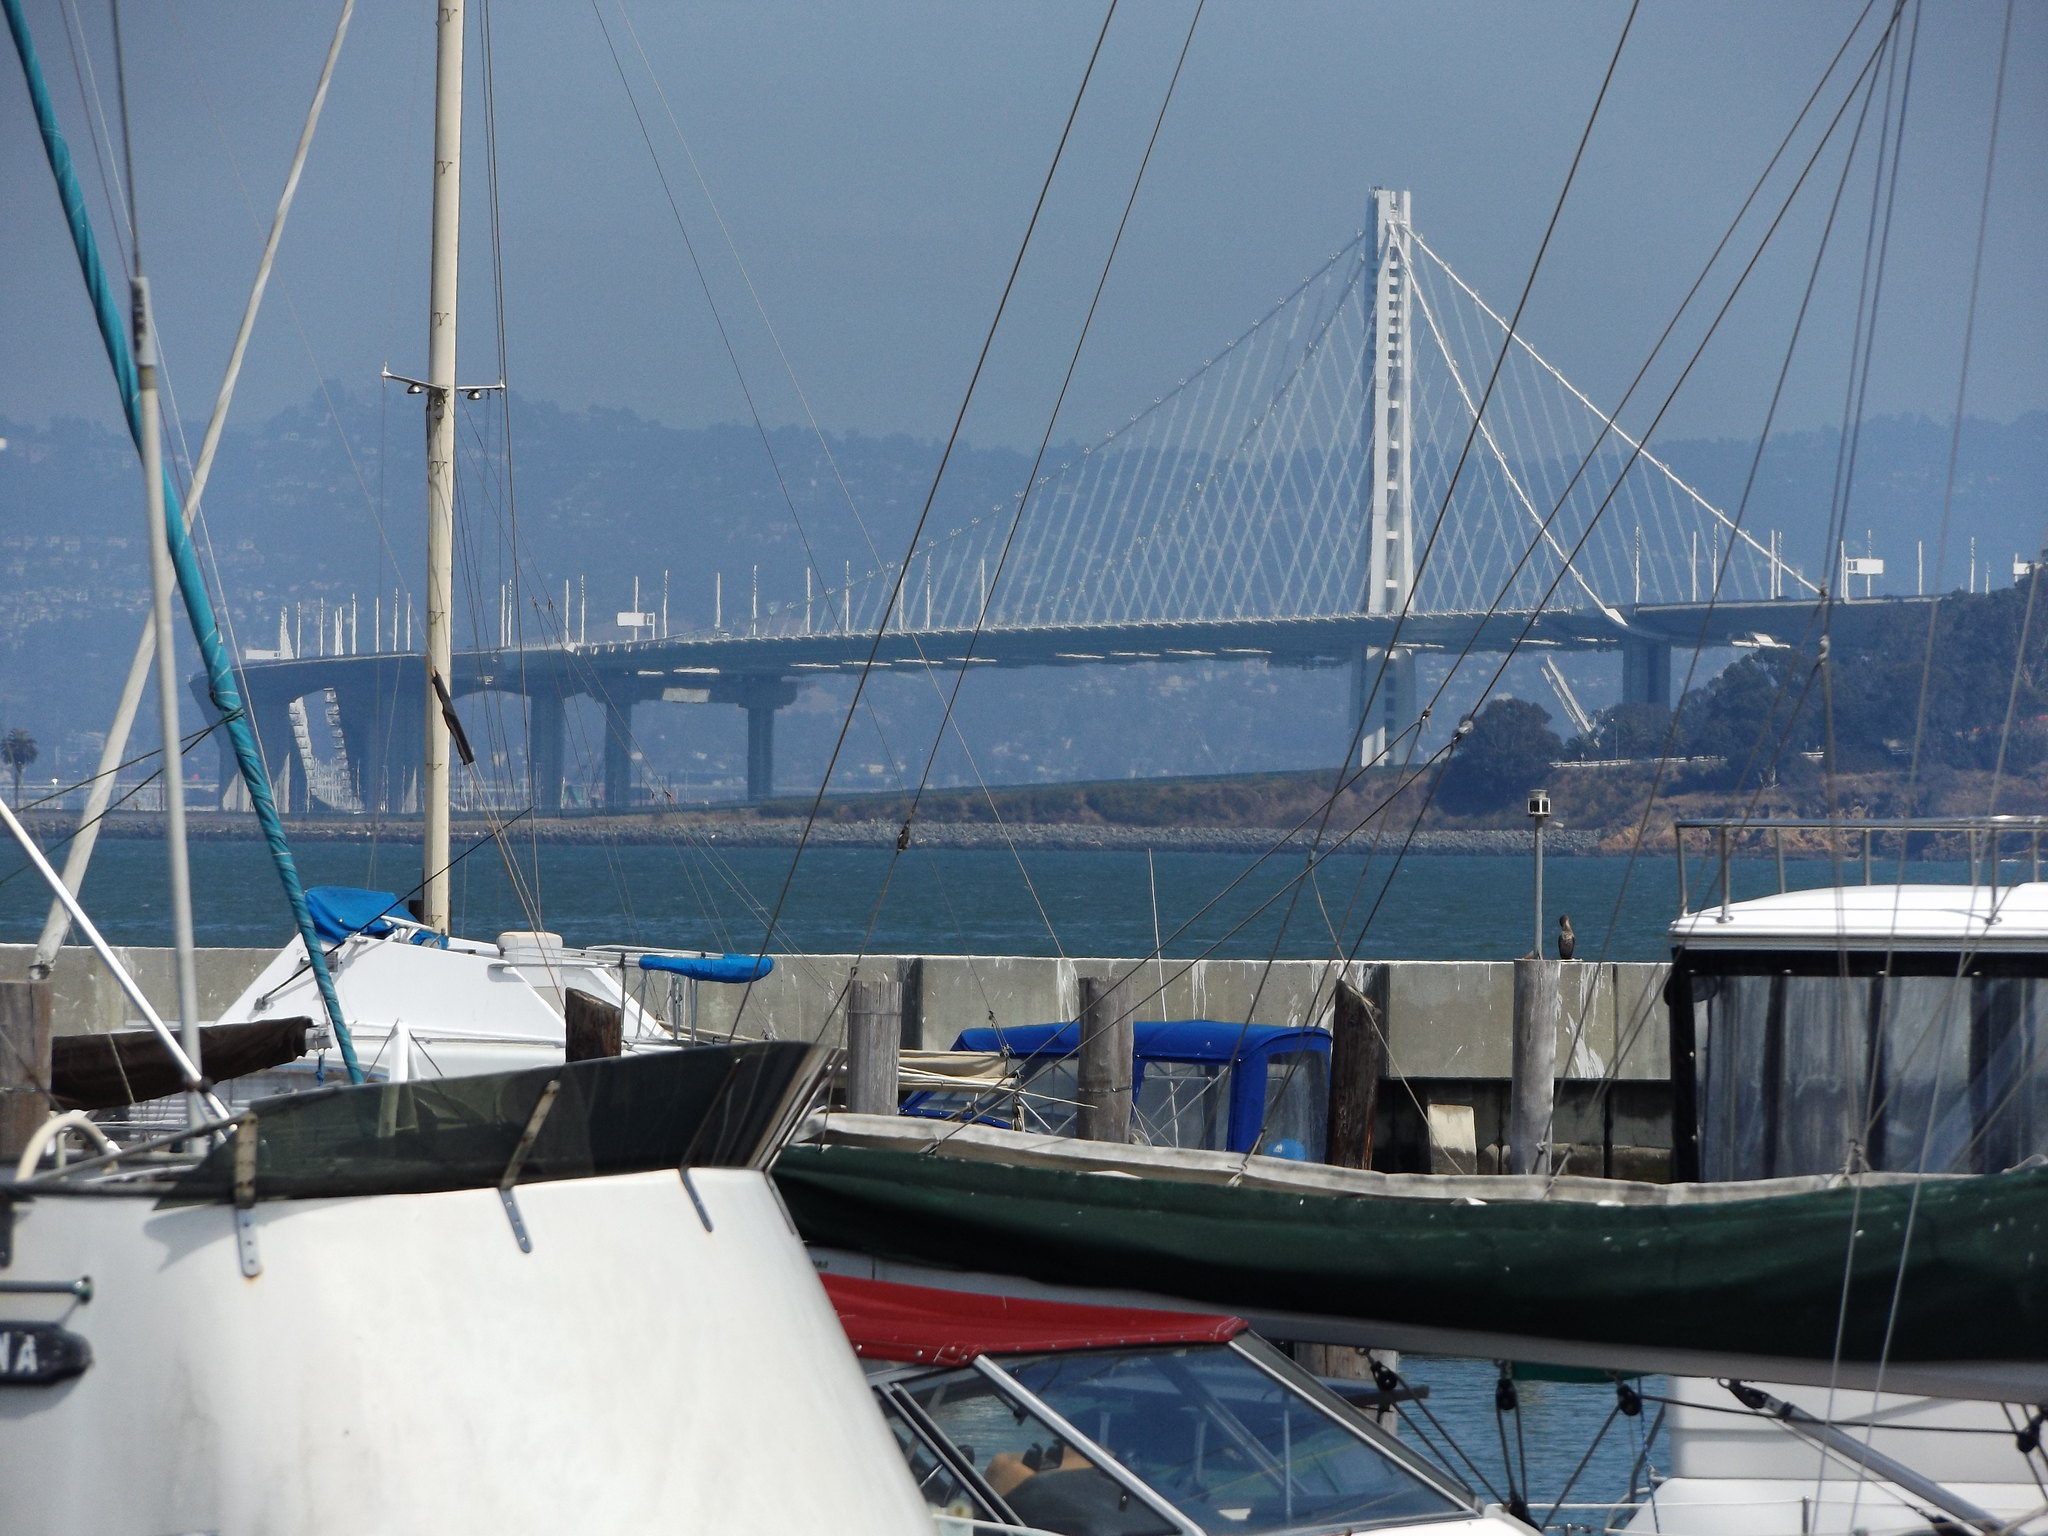 Eastern Section of San Francisco Bay Bridge from Pier 39, San Francisco, California, USA, 6 September 2018